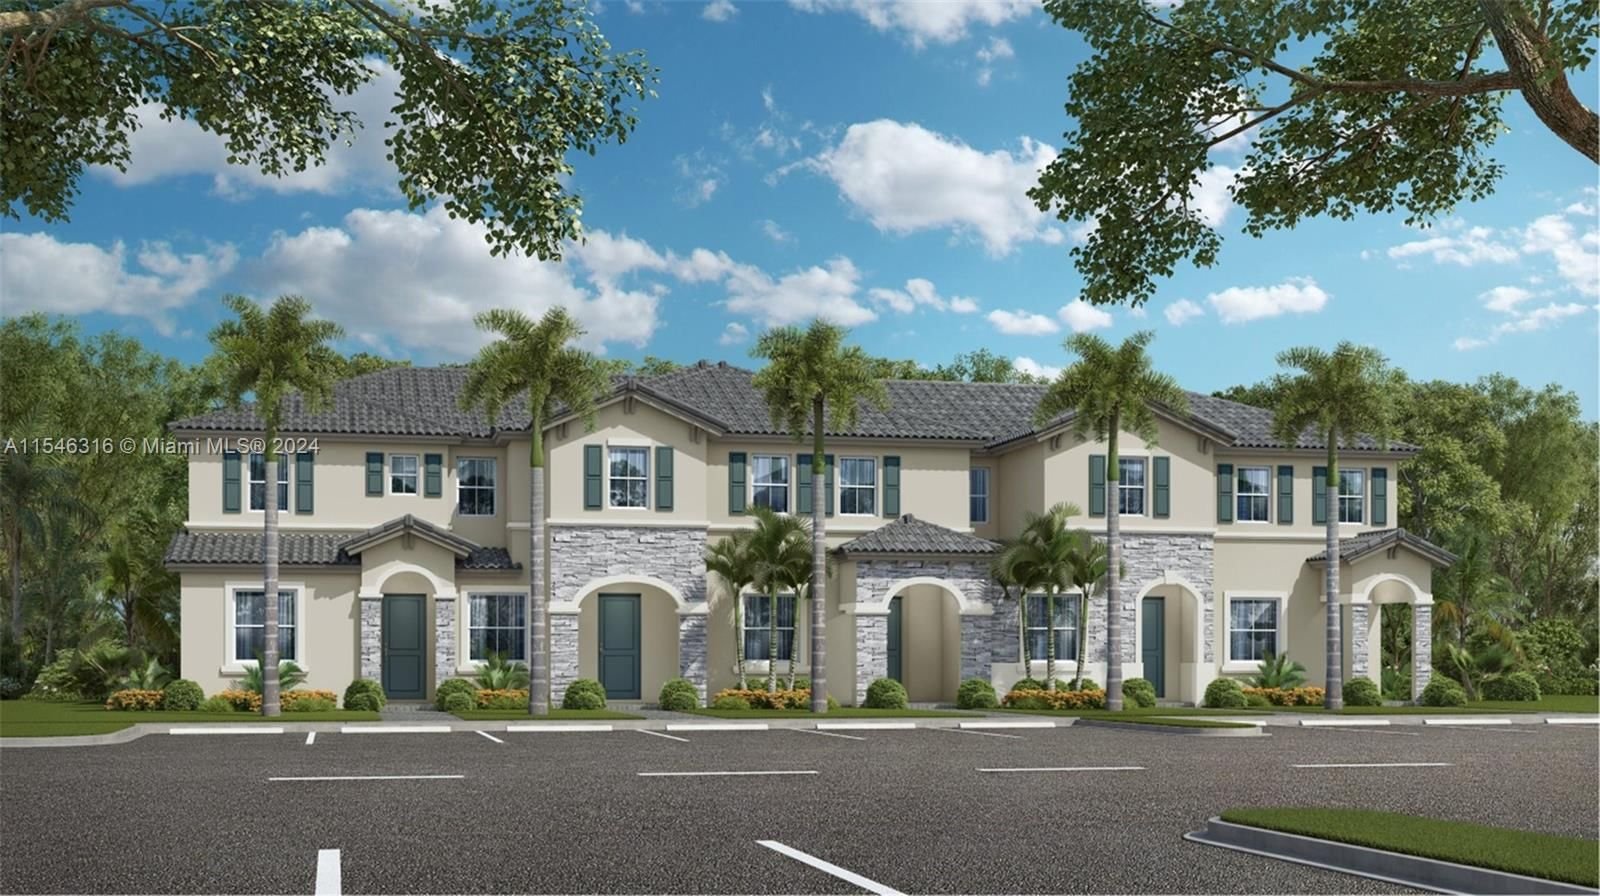 Real estate property located at 29277 163 ct, Miami-Dade County, Cedar Pointe, Homestead, FL